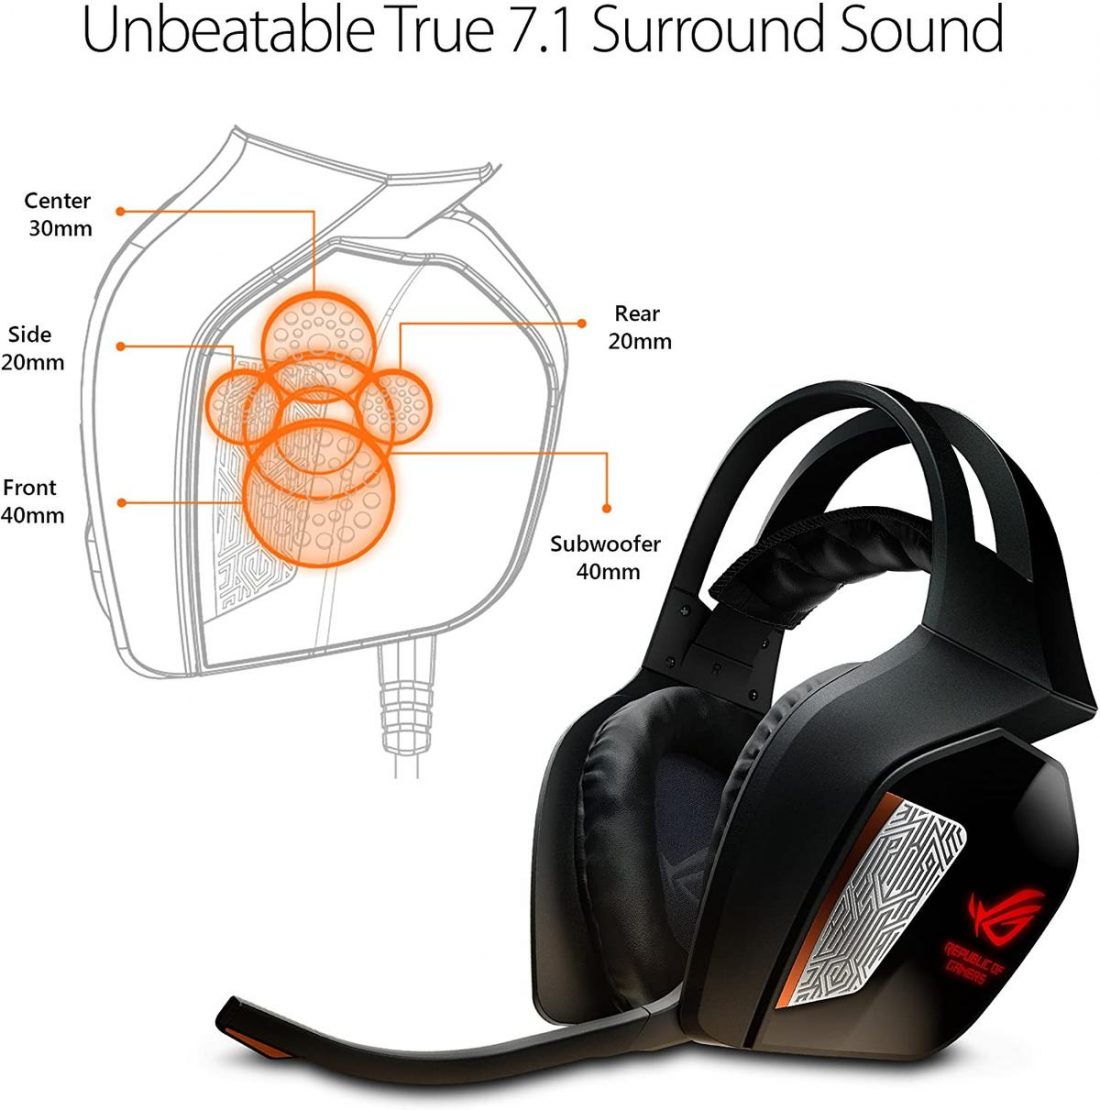 ASUS ROG Centurion true 7.1 surround gaming headset (From: Amazon)